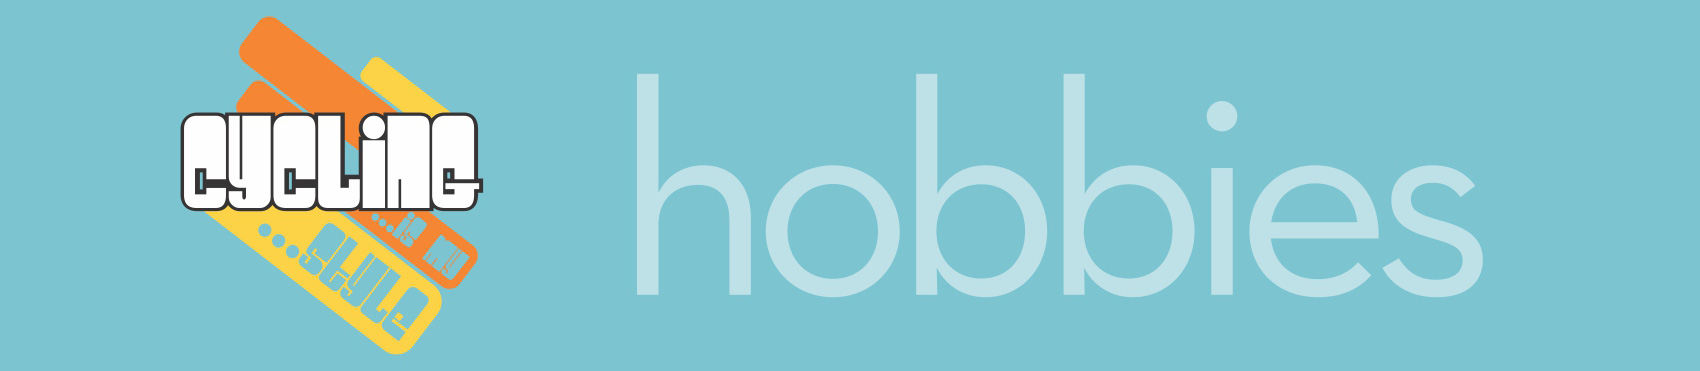 Hobbies logo ideas